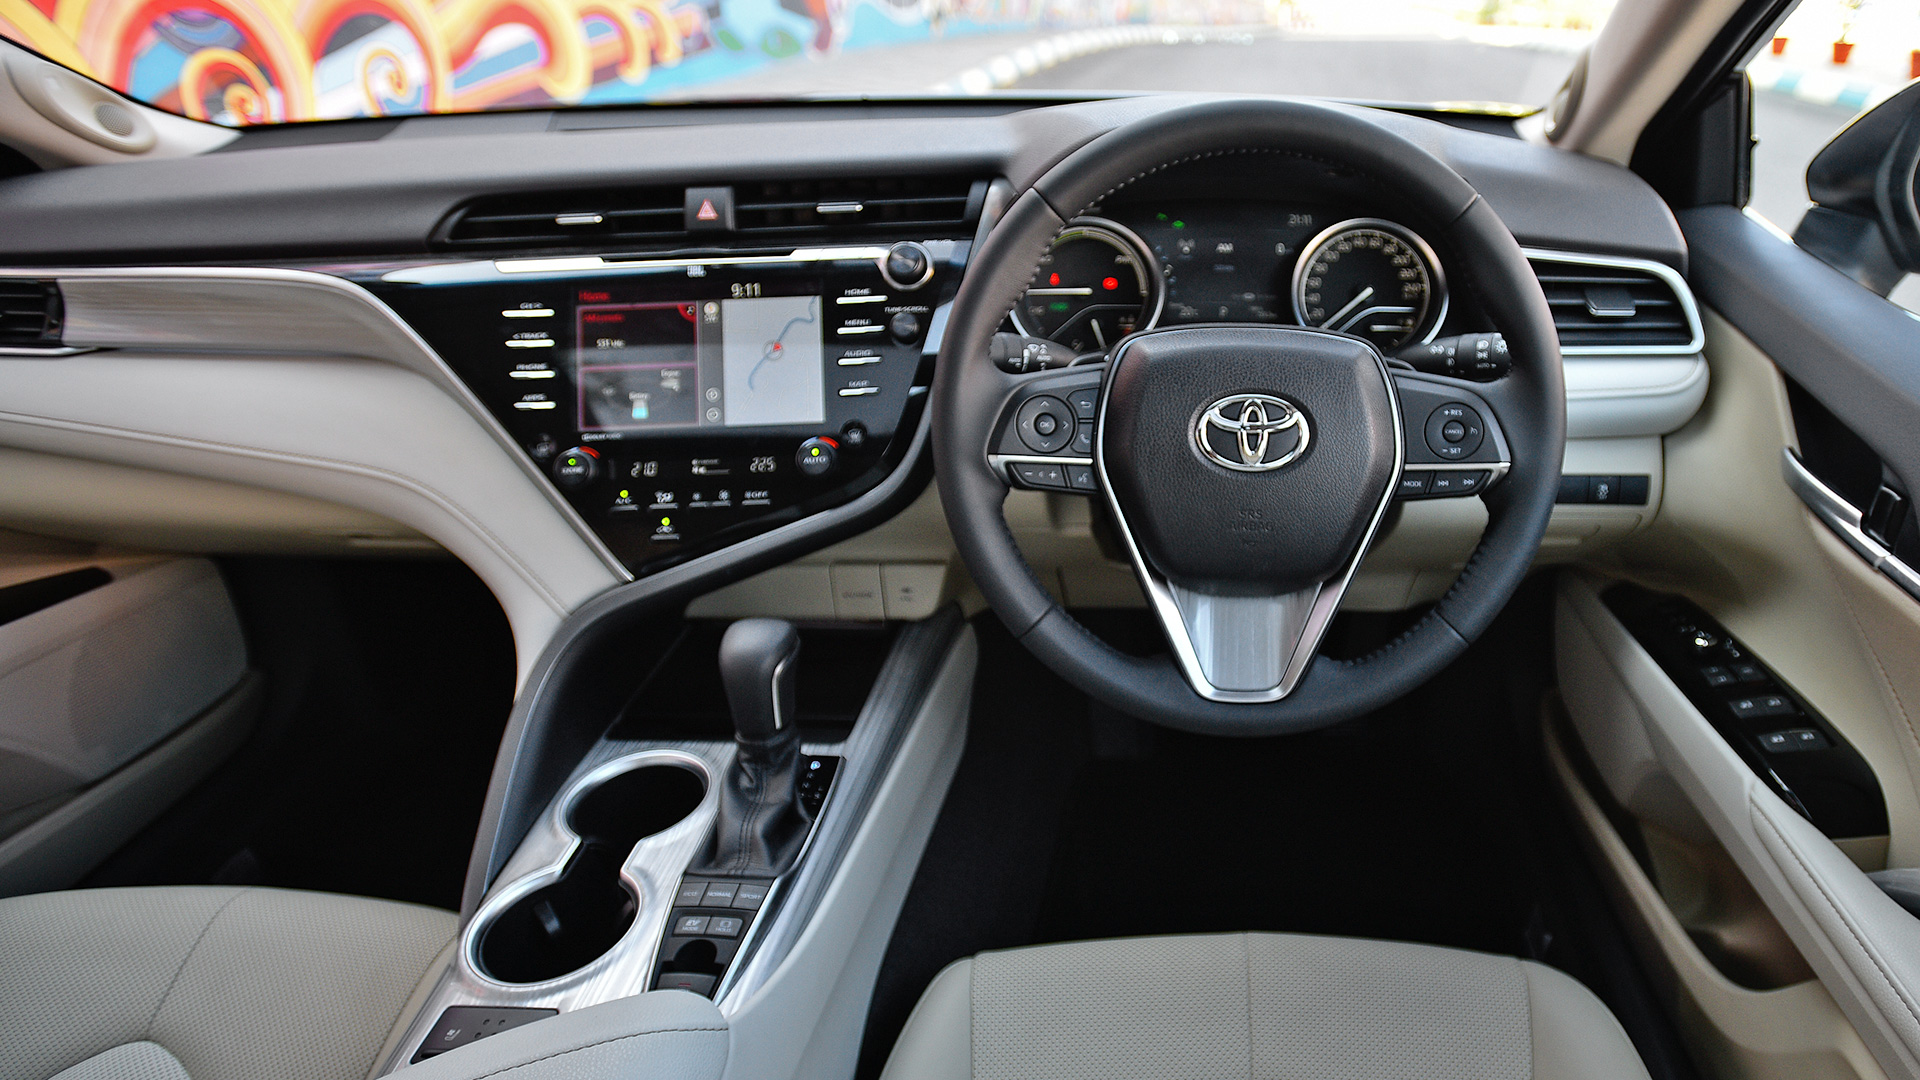 Toyota Camry 2019 Hybrid Interior Car Photos Overdrive